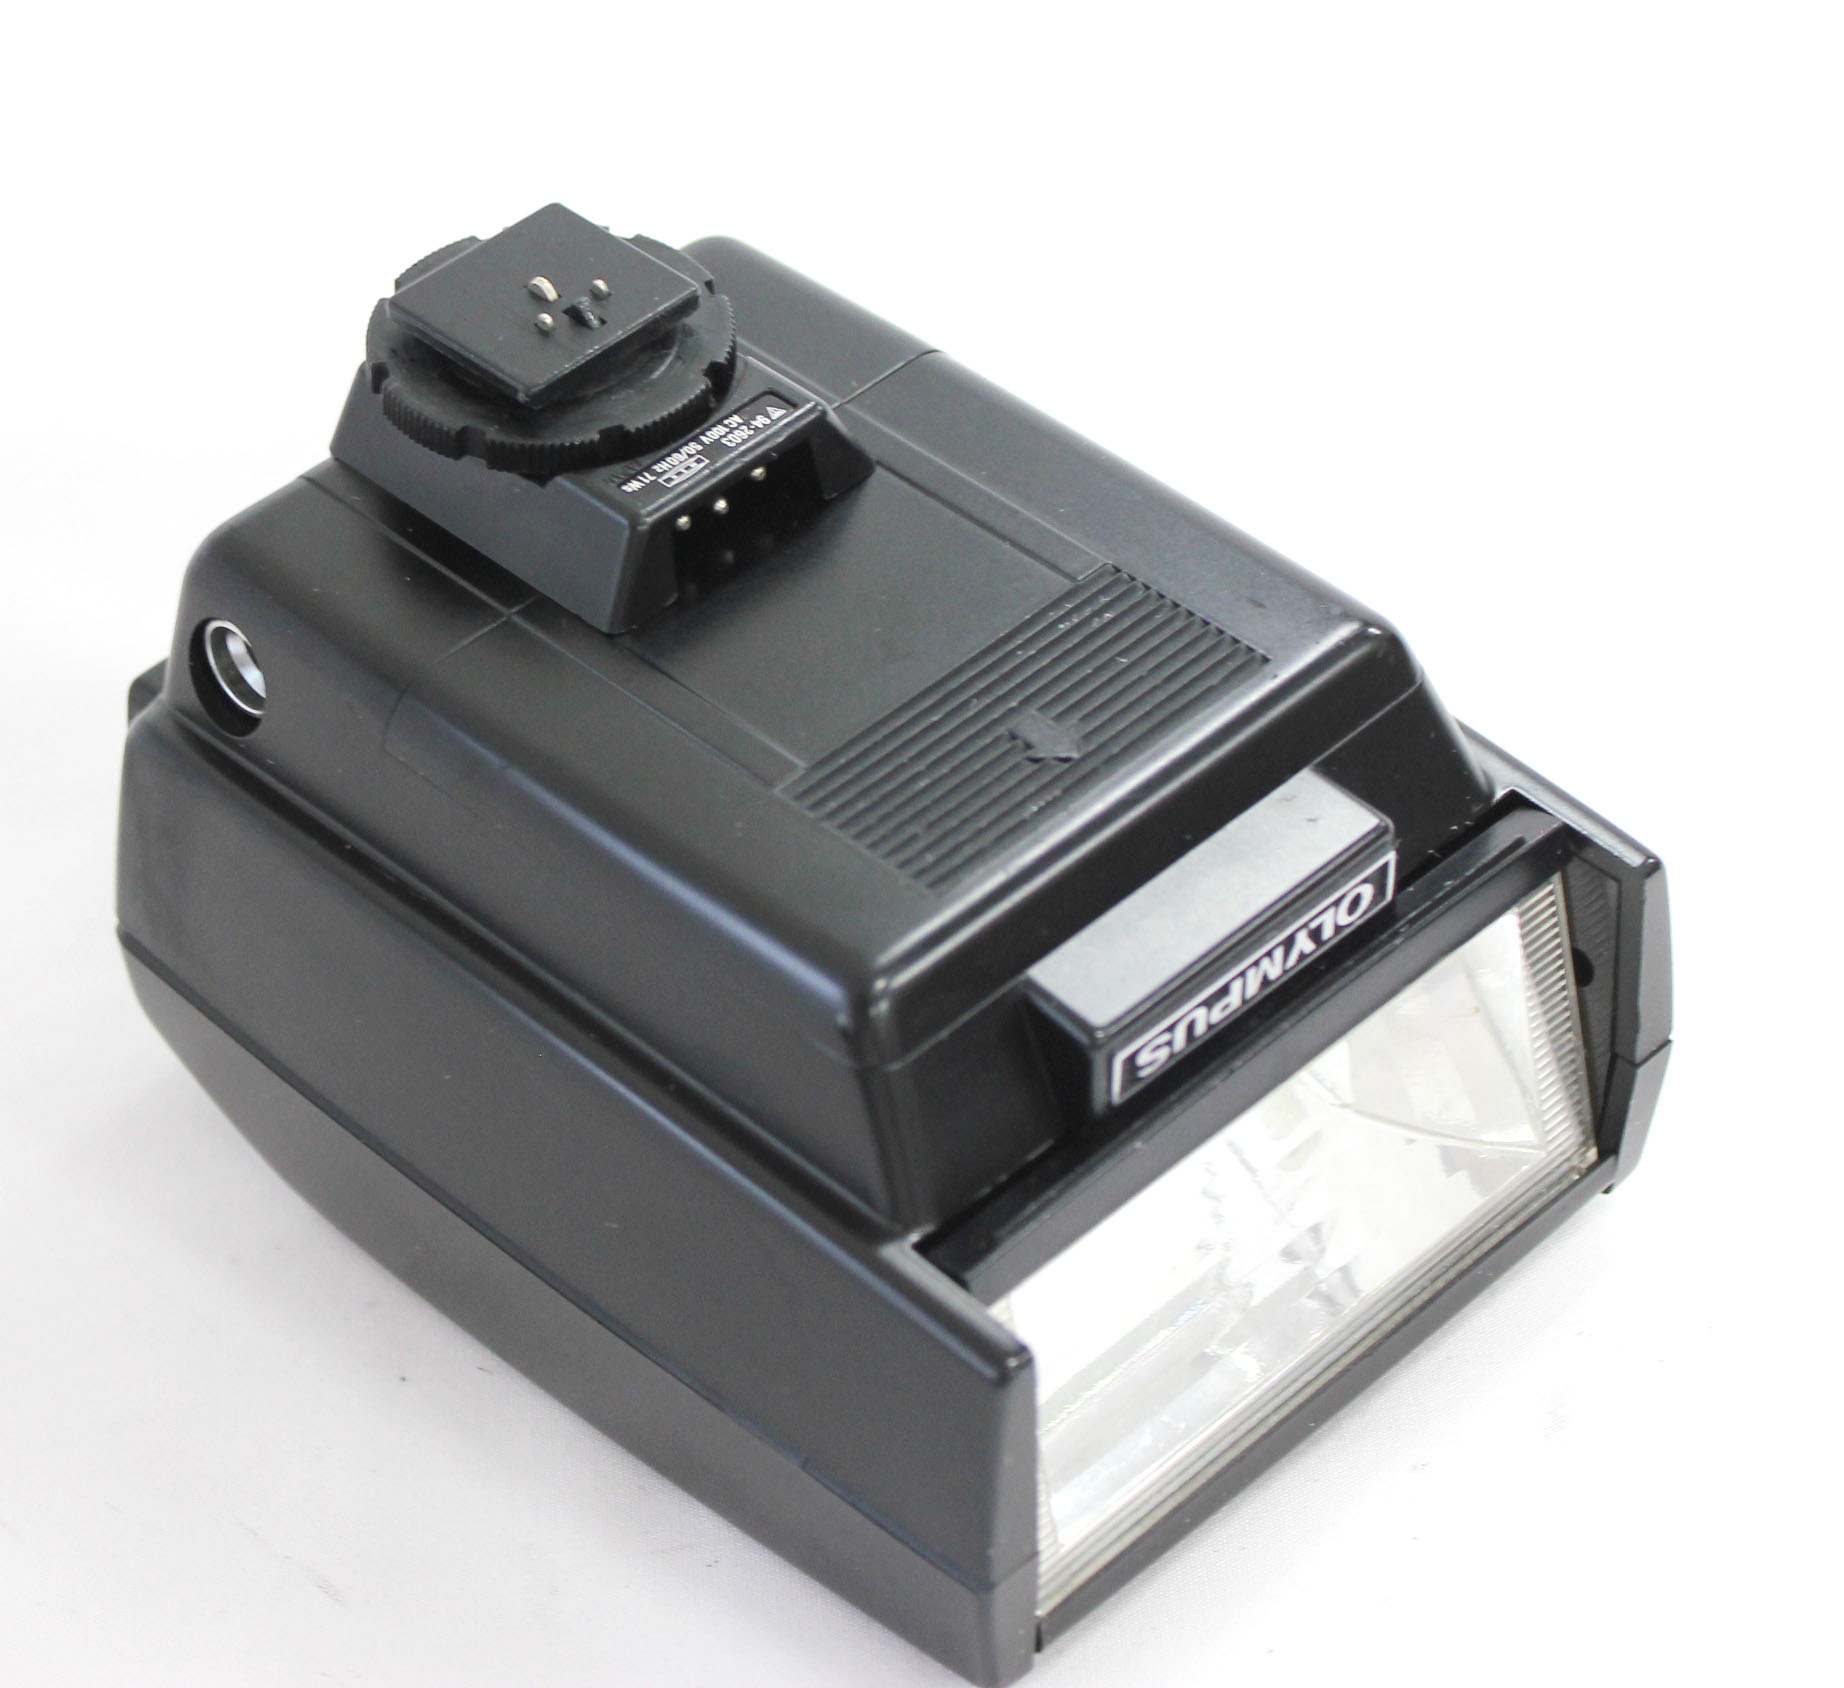 Olympus OM-2N 35mm SLR Film Camera with Macro 50mm F/3.5 Lens, Winder & Flash from Japan Photo 21